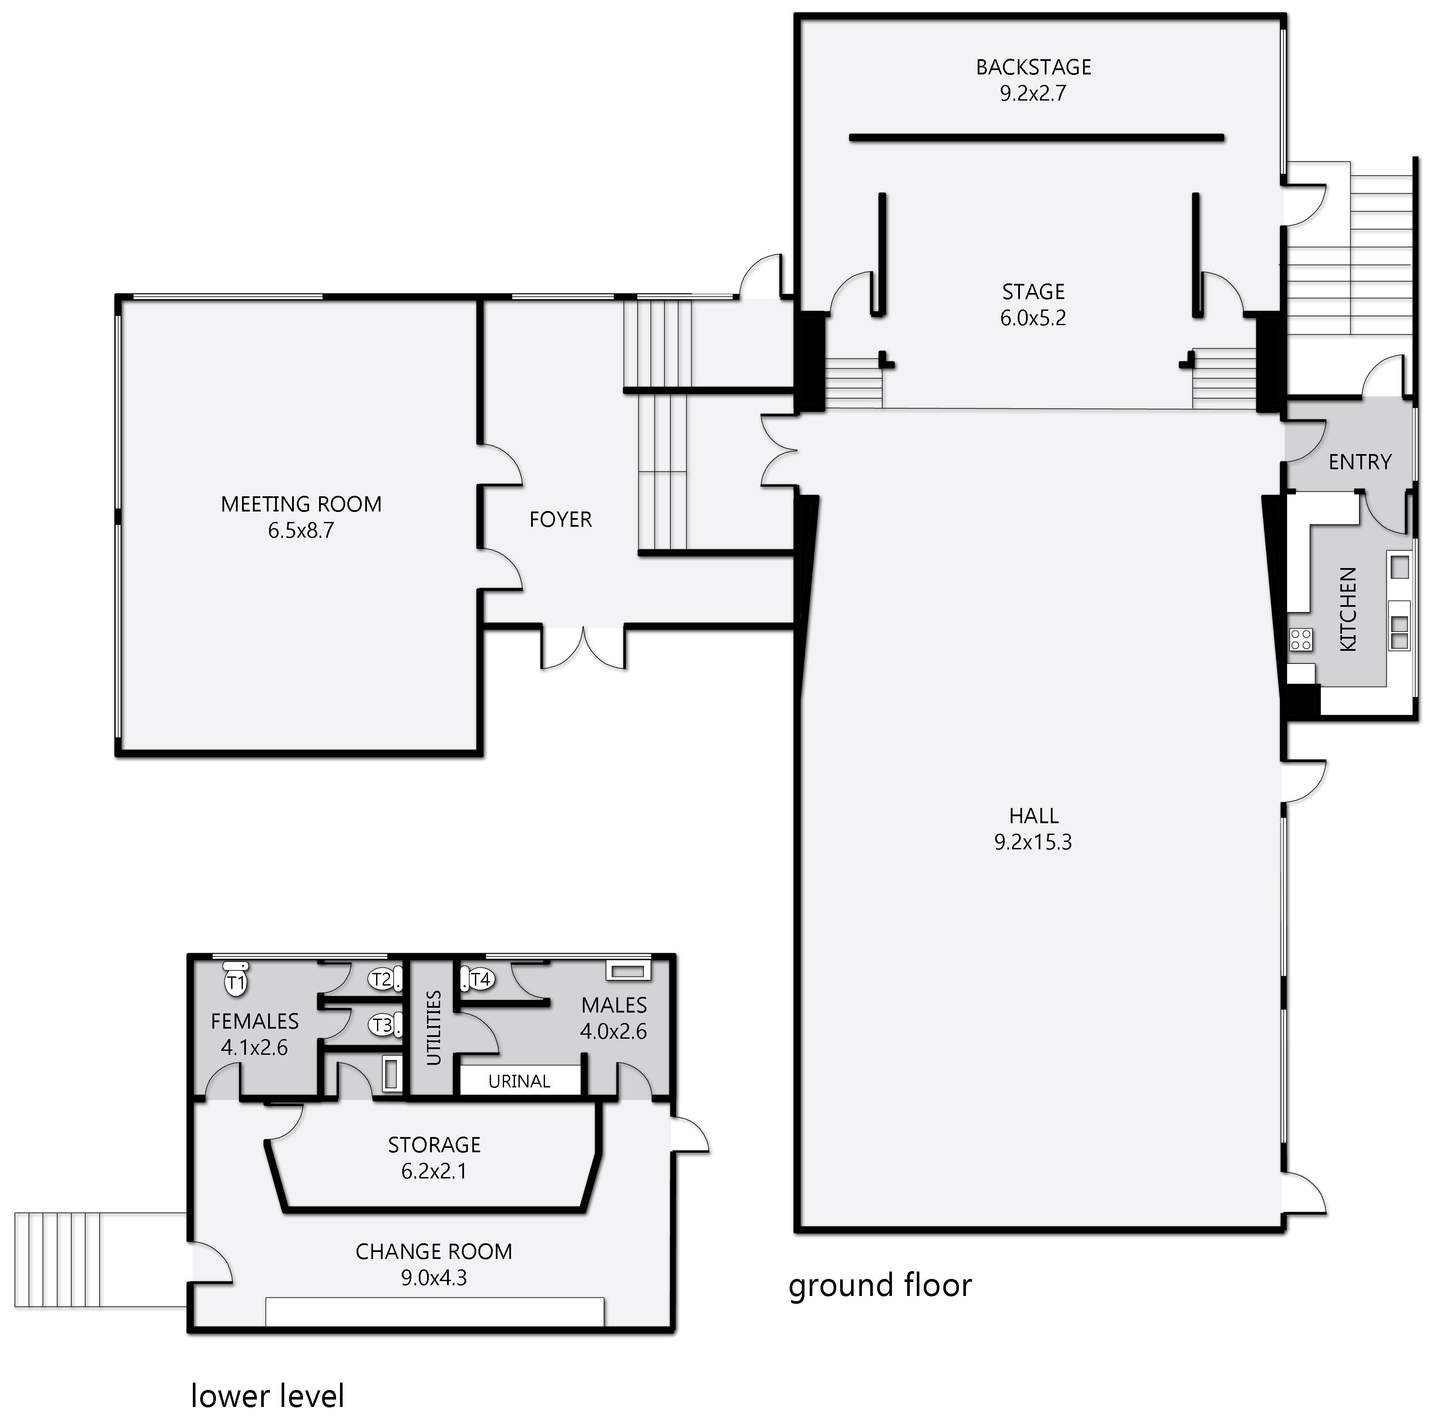 Black Rock Civic Centre - Floor Plan